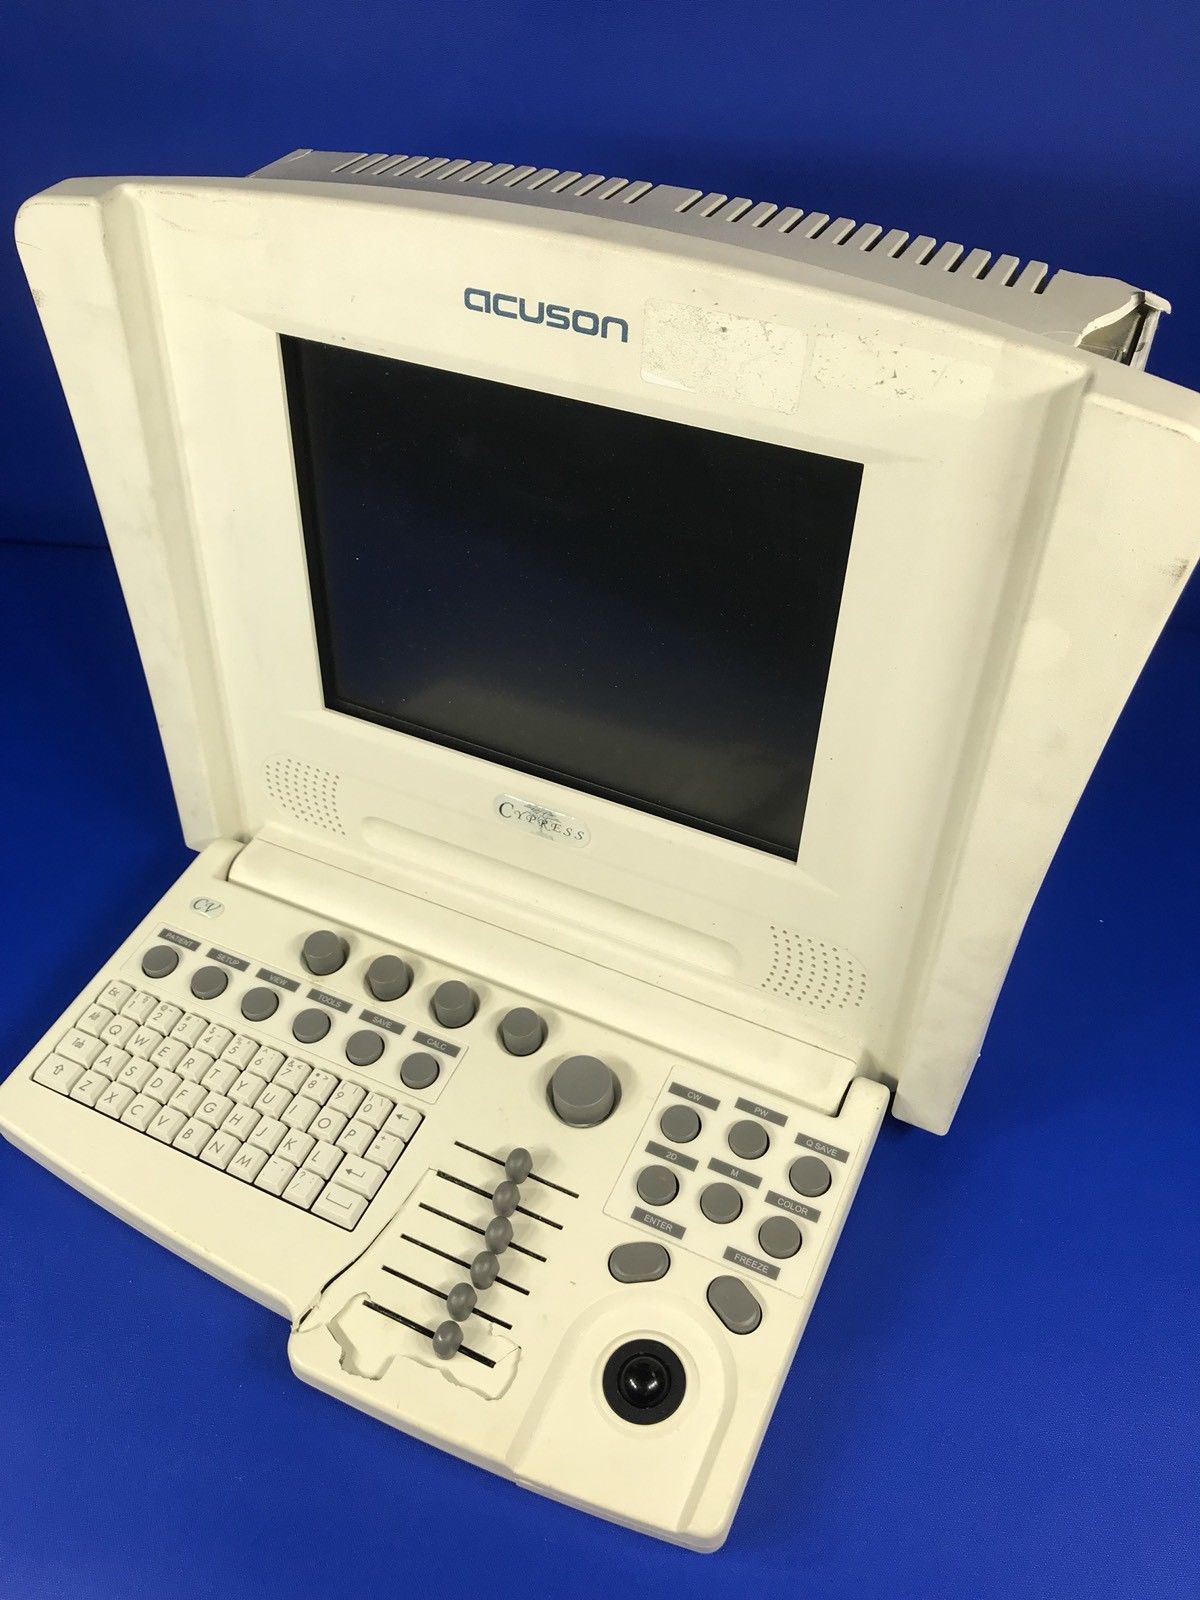 SIEMENS  Acuson Cypress Ultrasound Machine DIAGNOSTIC ULTRASOUND MACHINES FOR SALE